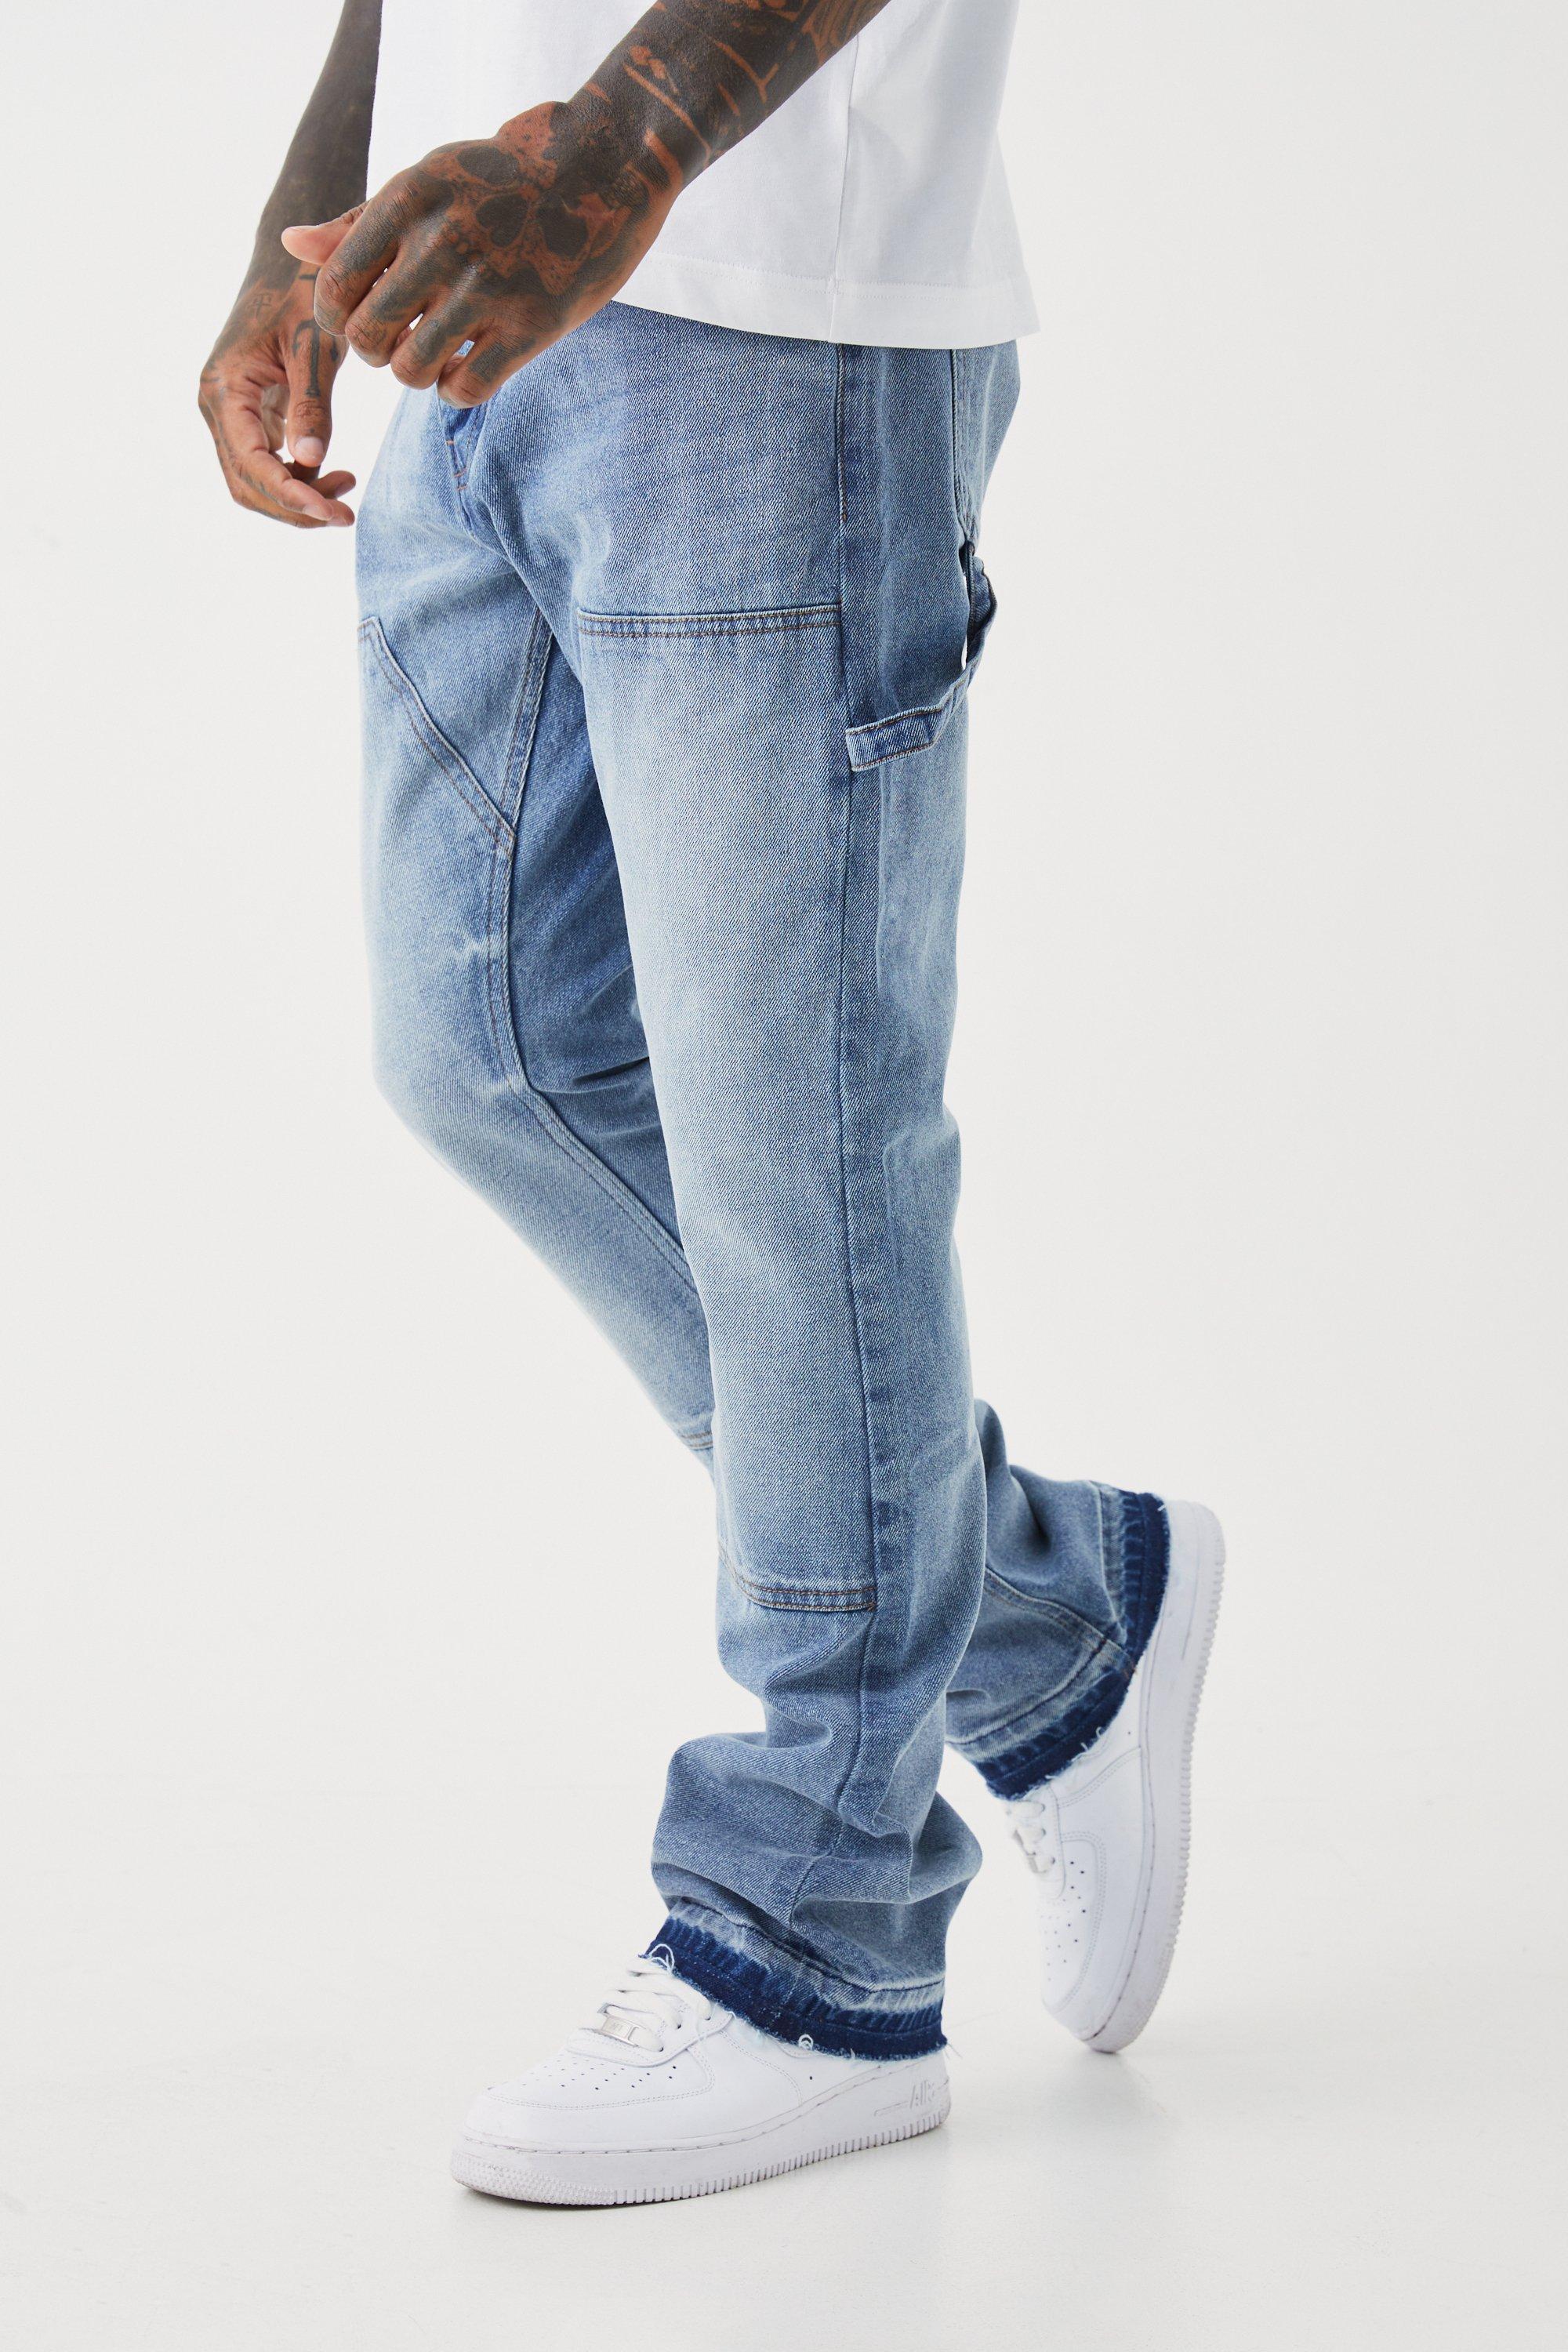 Image of Jeans a zampa Slim Fit in denim rigido stile Carpenter, Azzurro